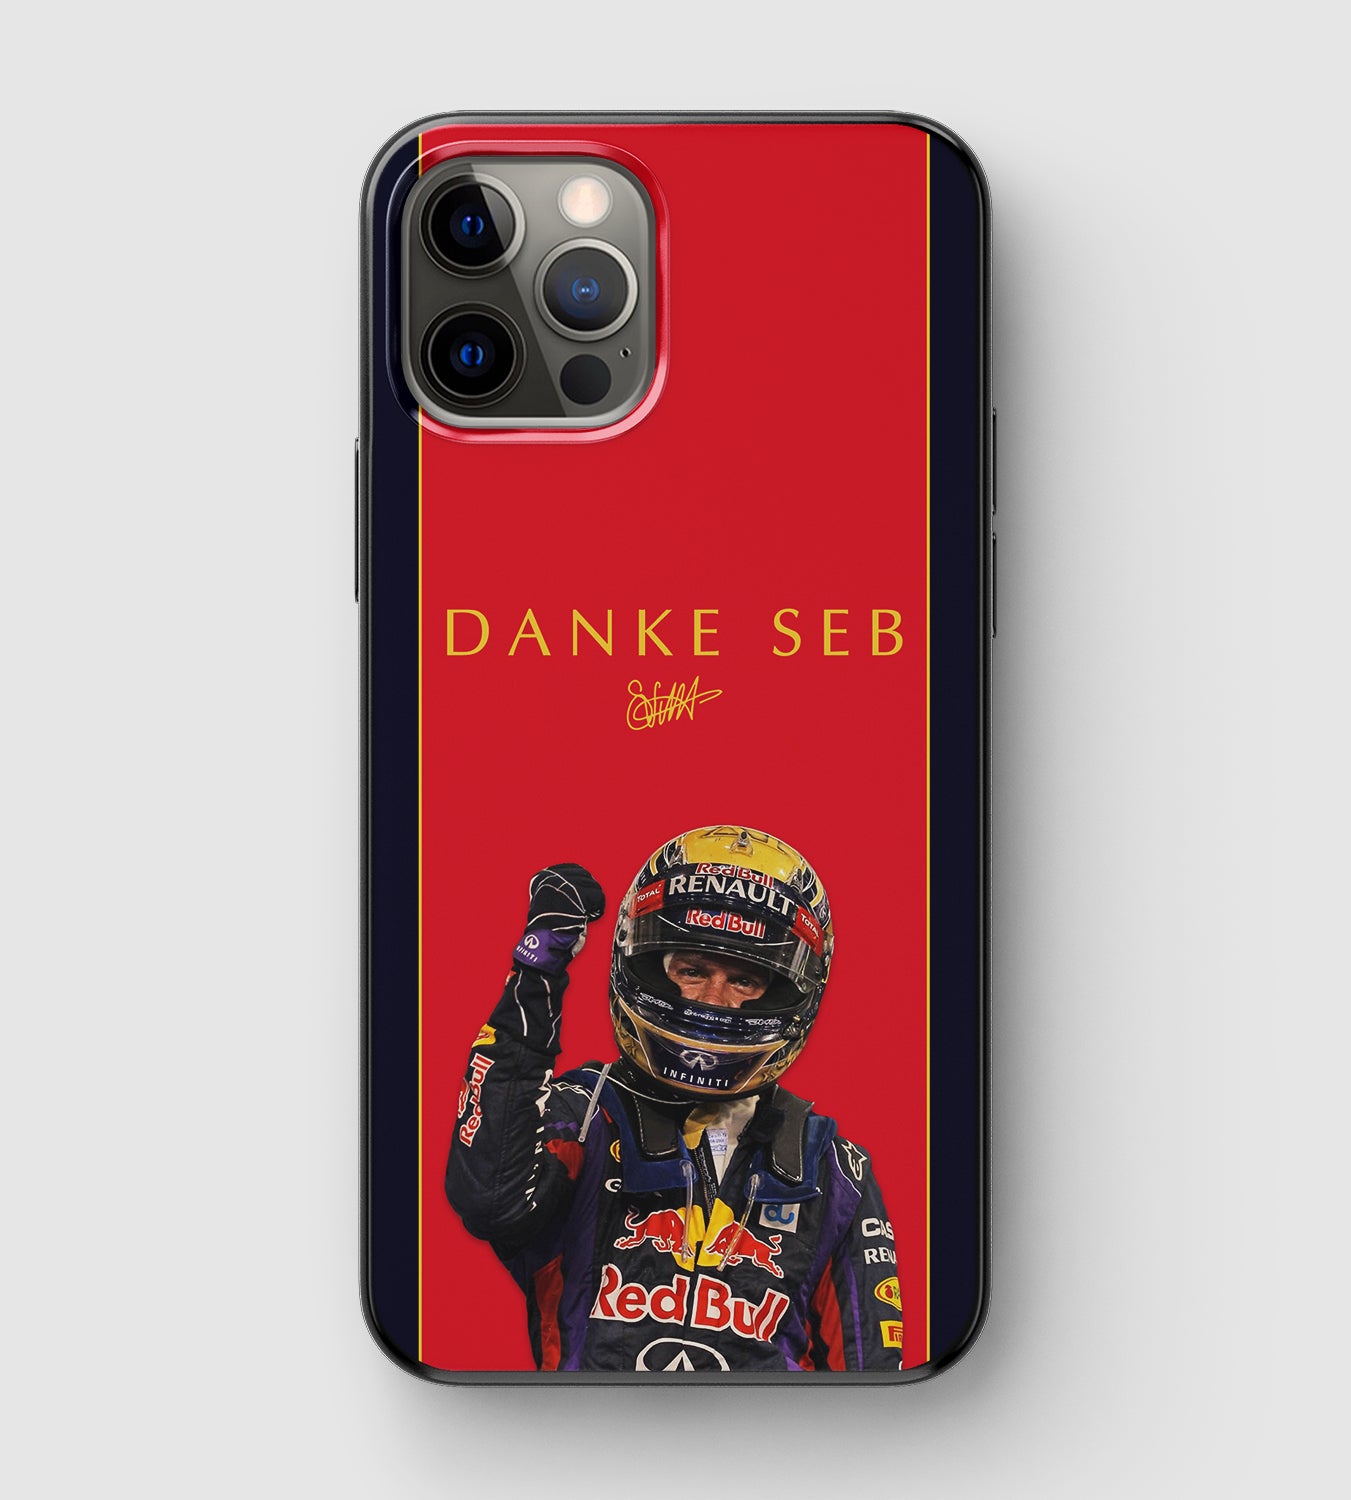 Iconic Formula 1 Red Bull Racing driver Sebastian Vettel 'Danke Seb' phone case